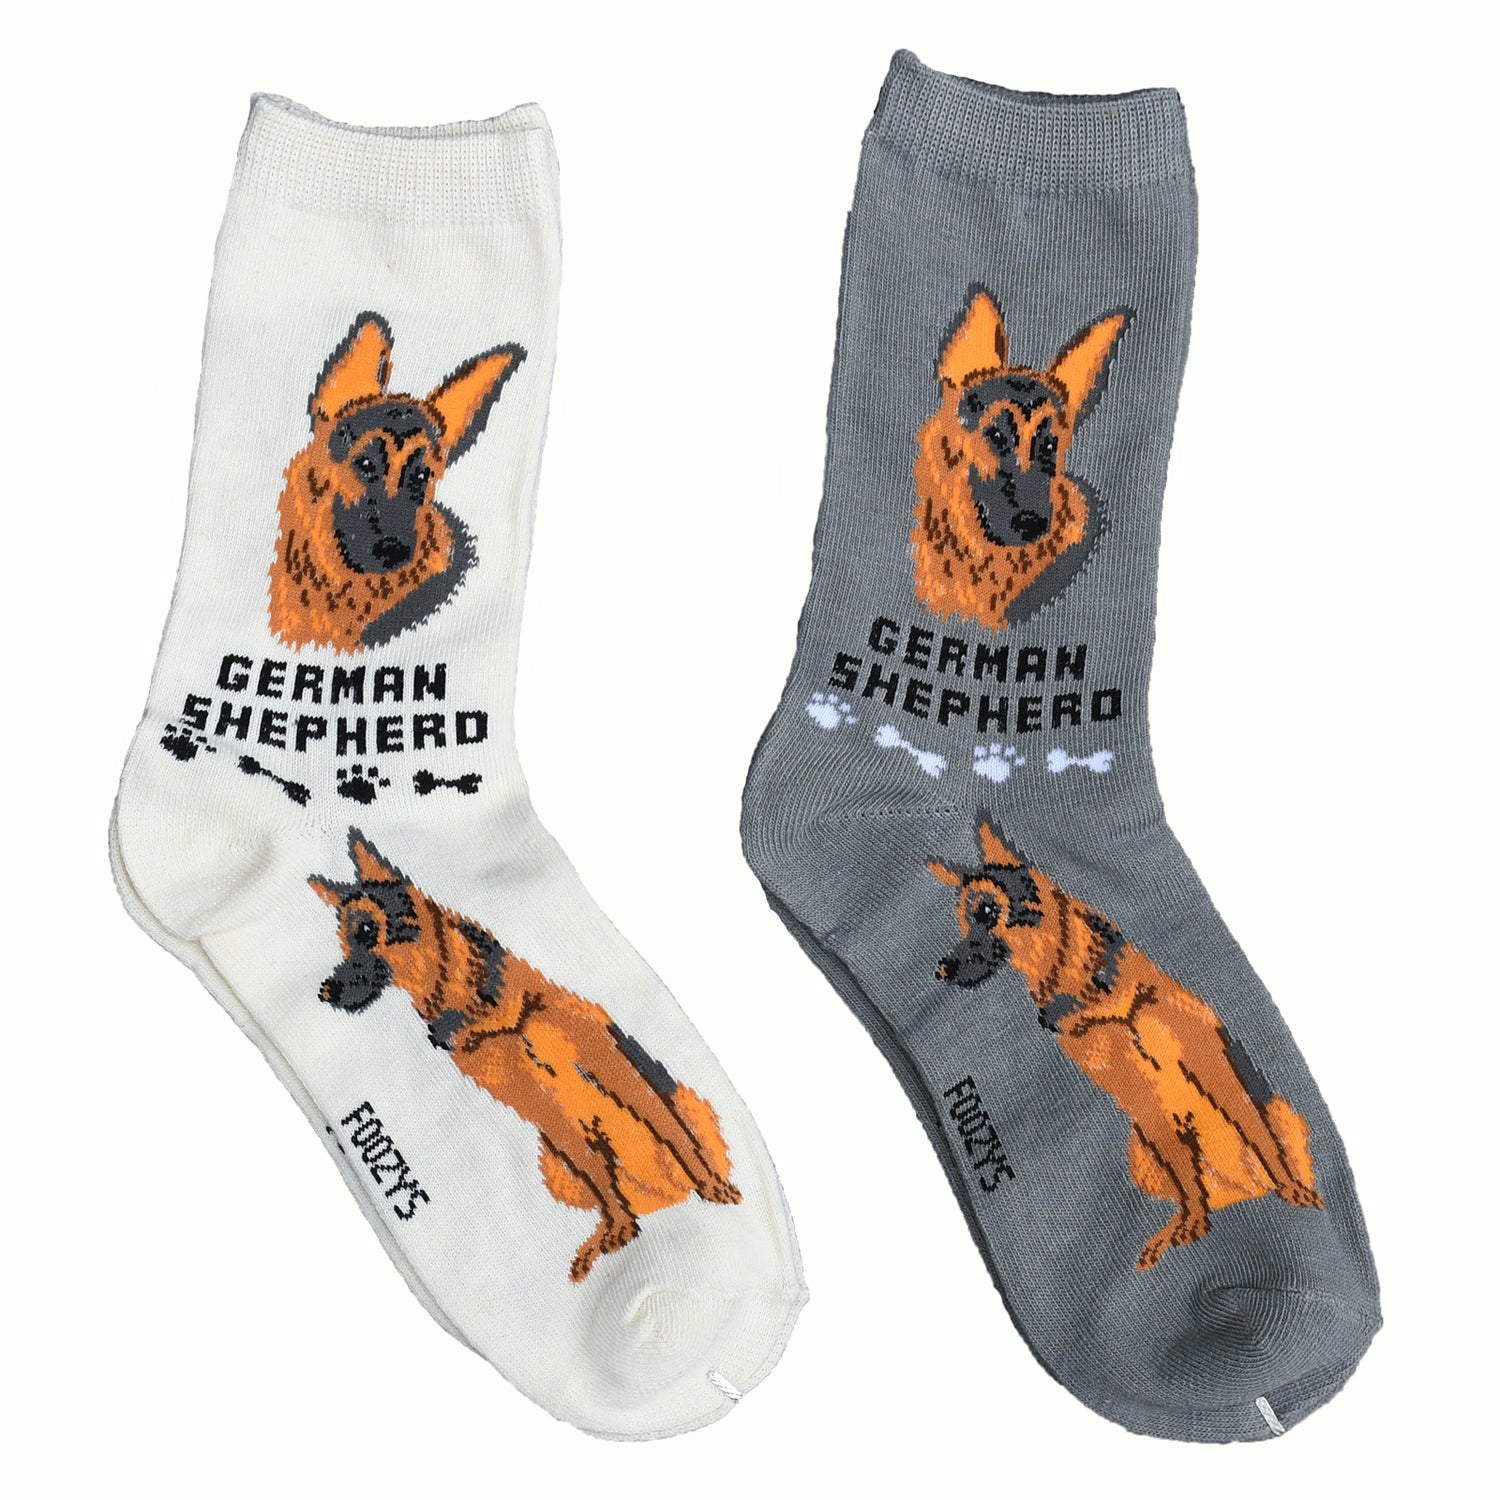 "Foozys German Shepherd Socks" - one size fits most